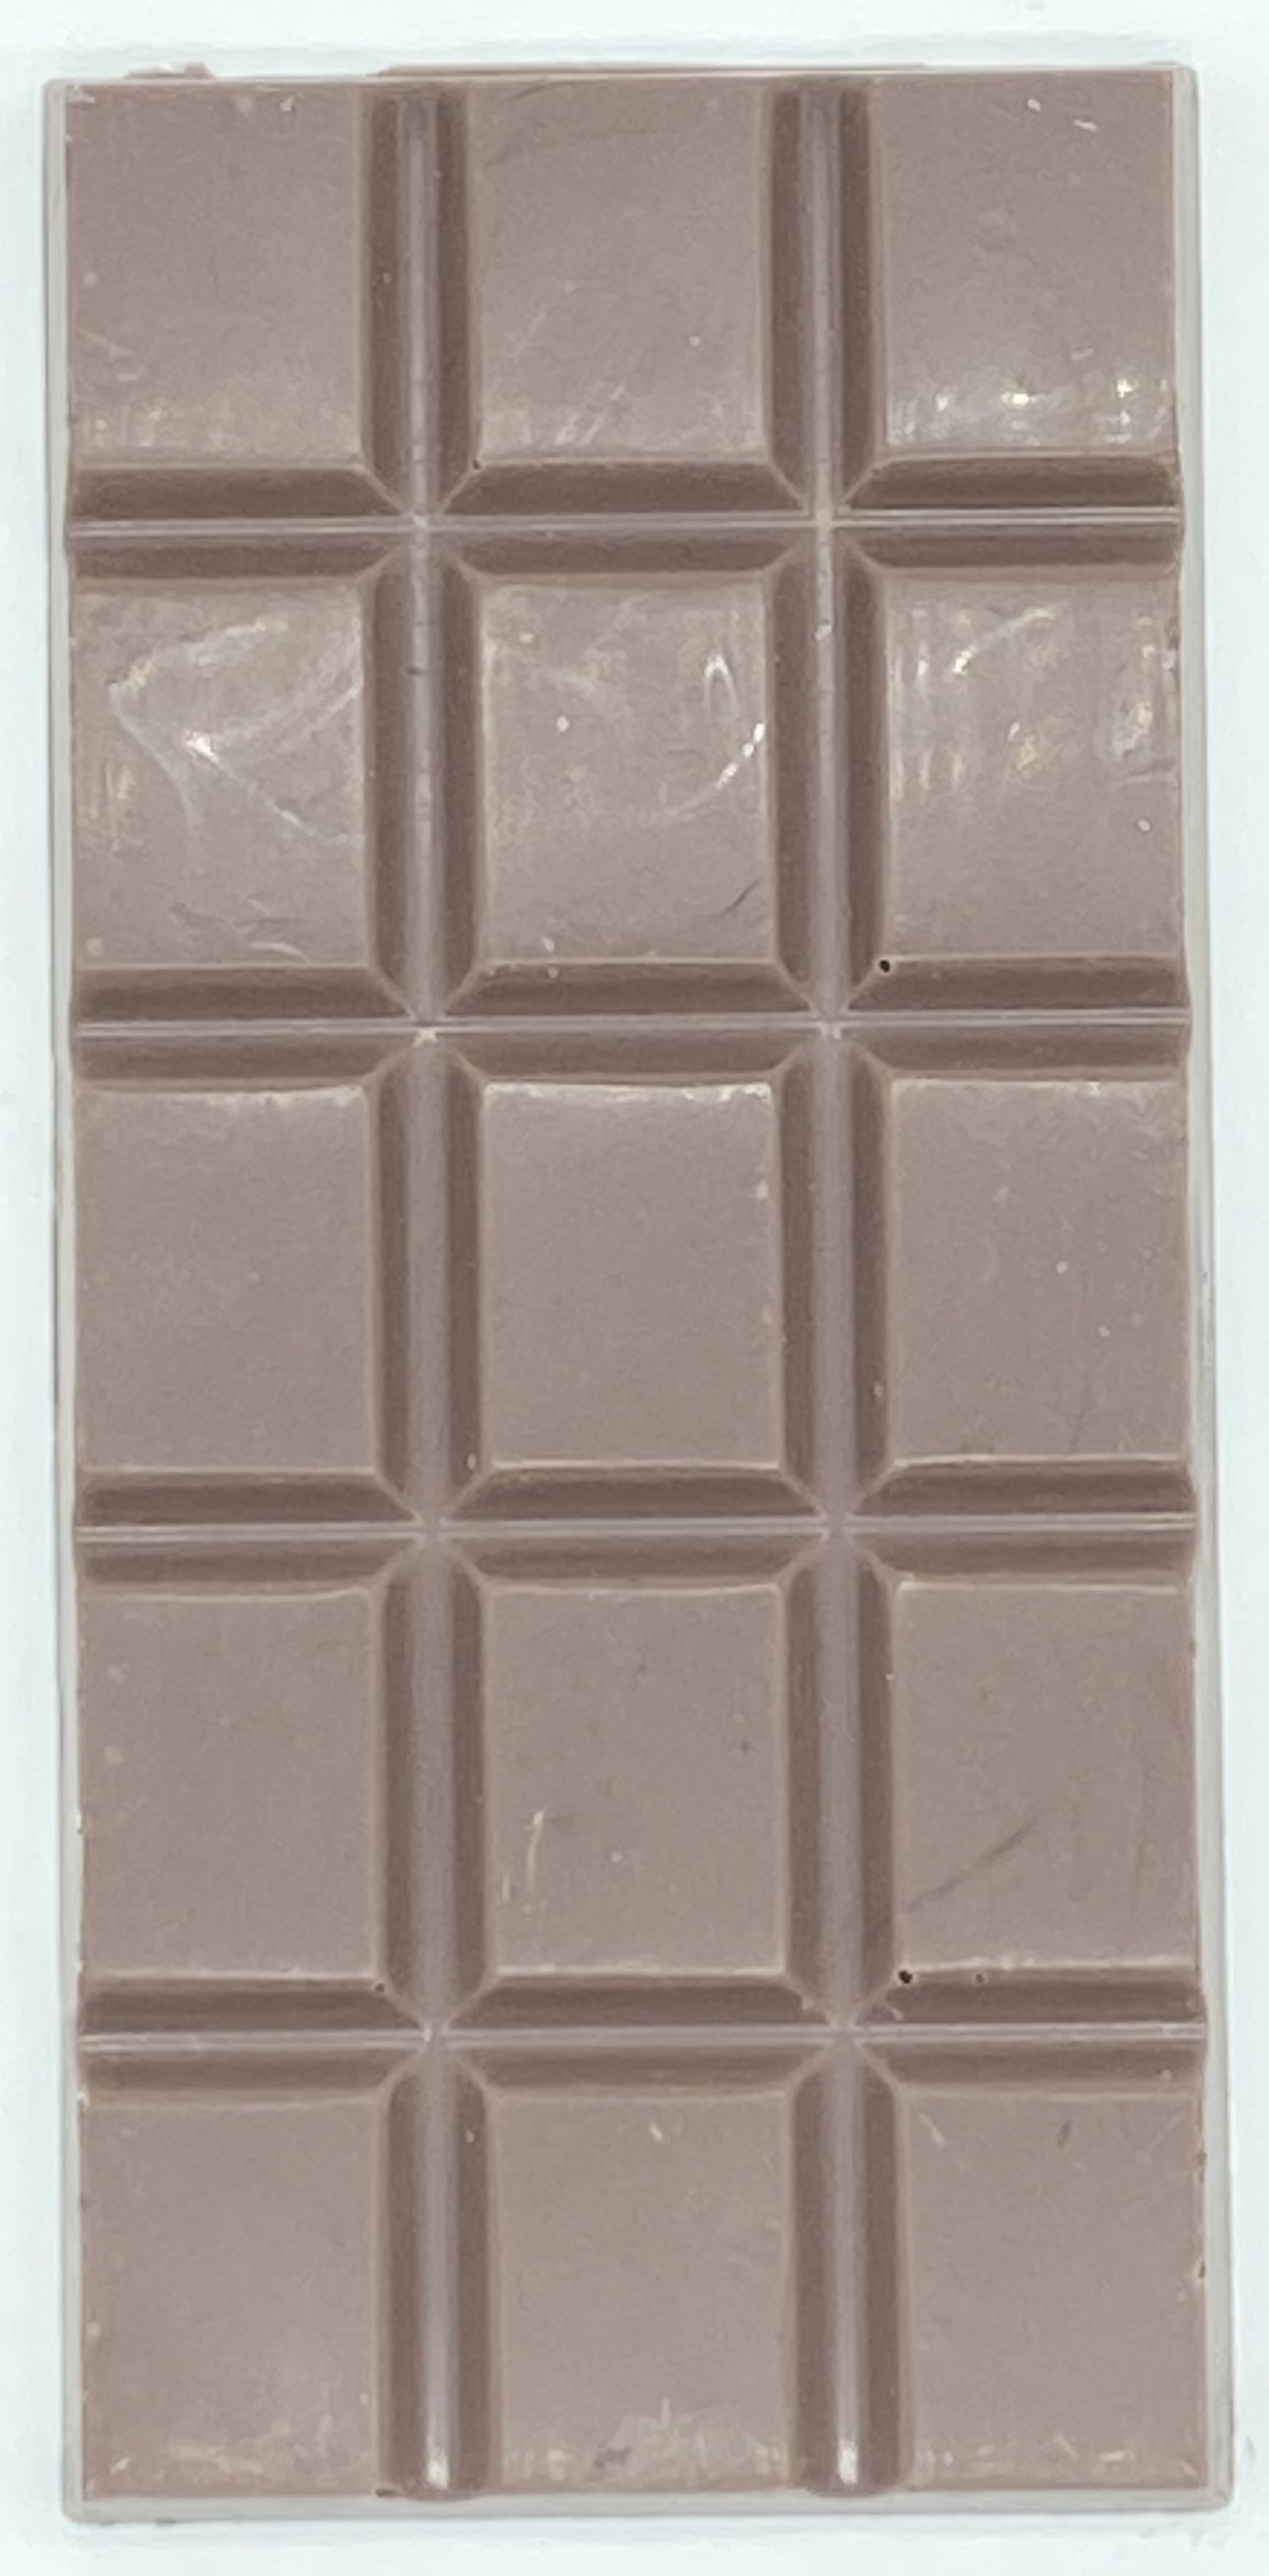 dark brown chocolate bar